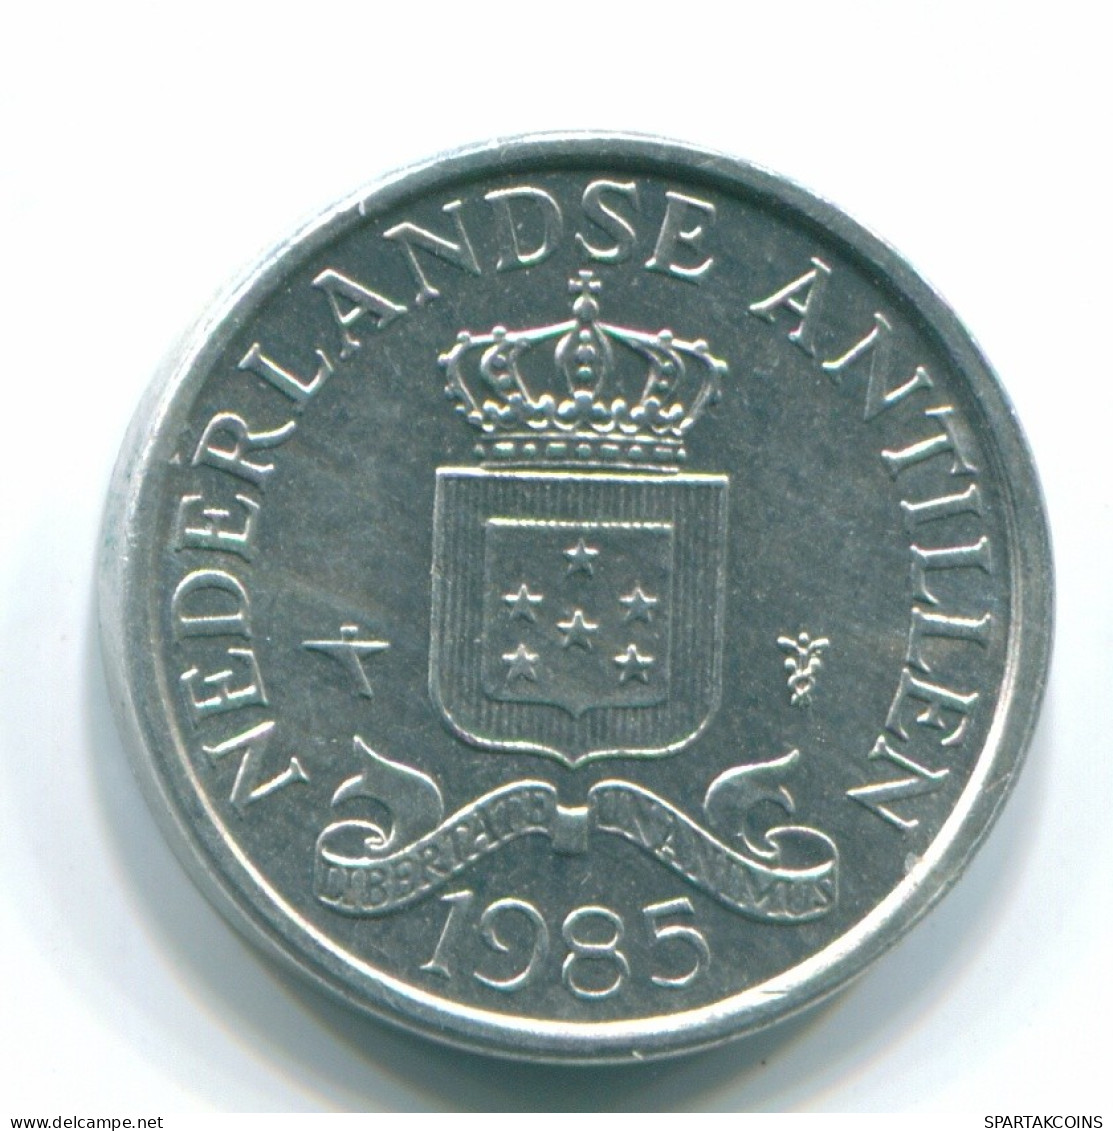 1 CENT 1985 NIEDERLÄNDISCHE ANTILLEN Aluminium Koloniale Münze #S11213.D.A - Nederlandse Antillen